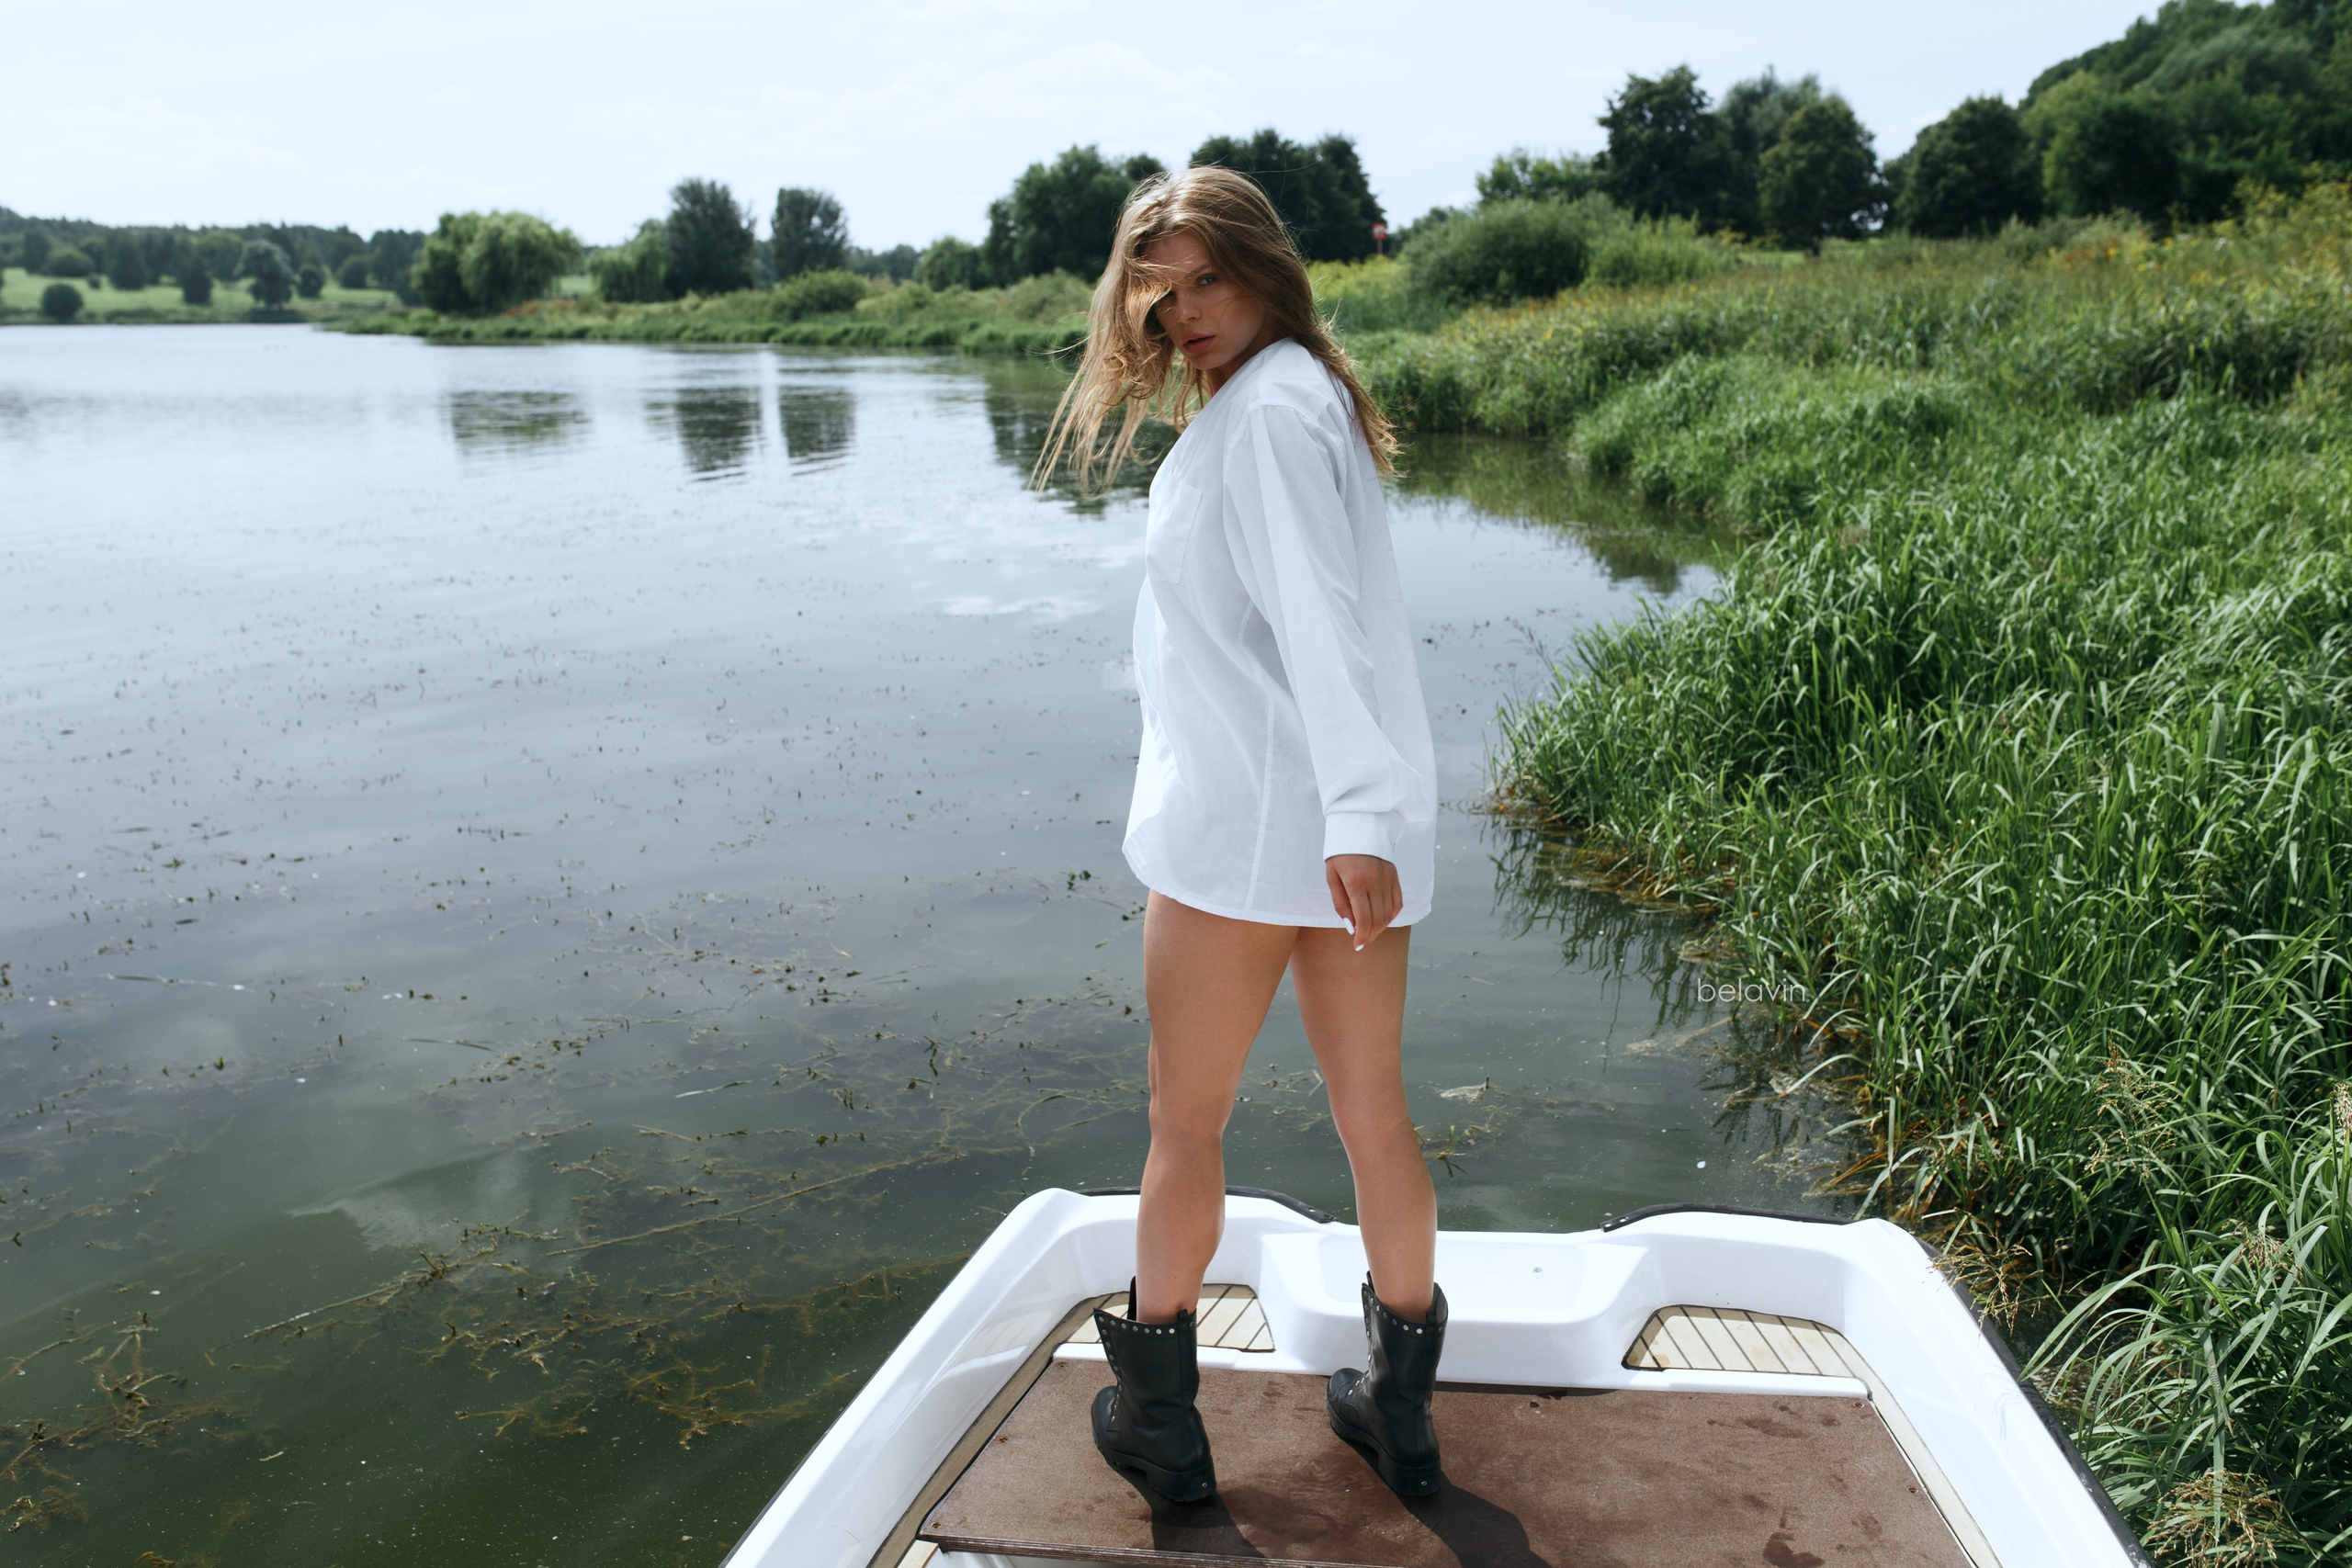 Women Alexander Belavin Shoes Water Boat Women Outdoors White Shirt Brunette Looking At Viewer White 2560x1707